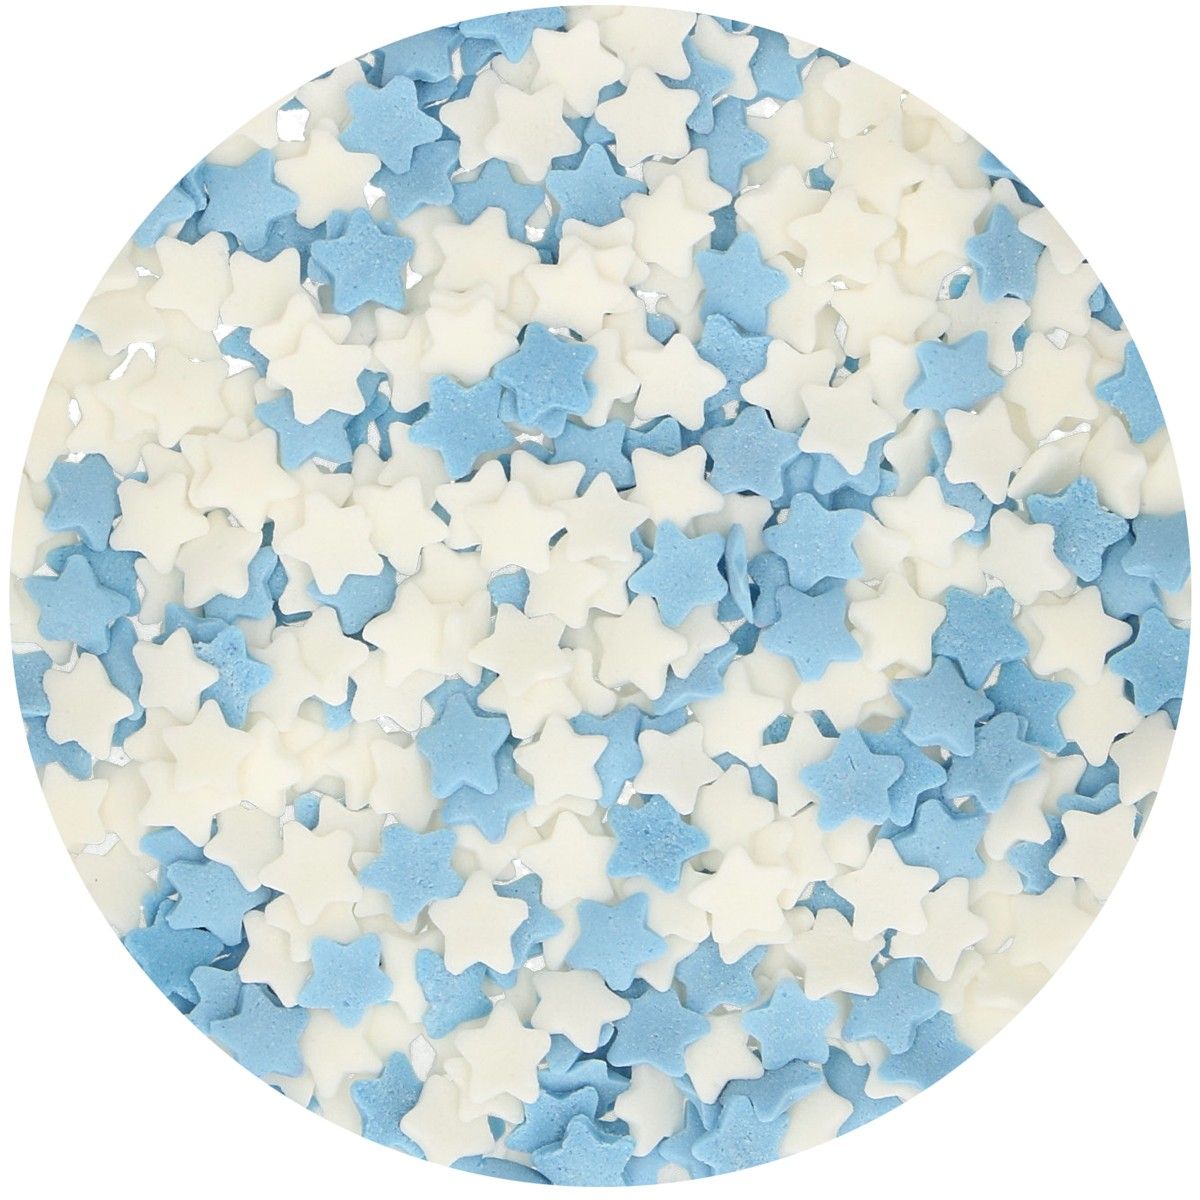 Funcakes mini stars blue/white 55g